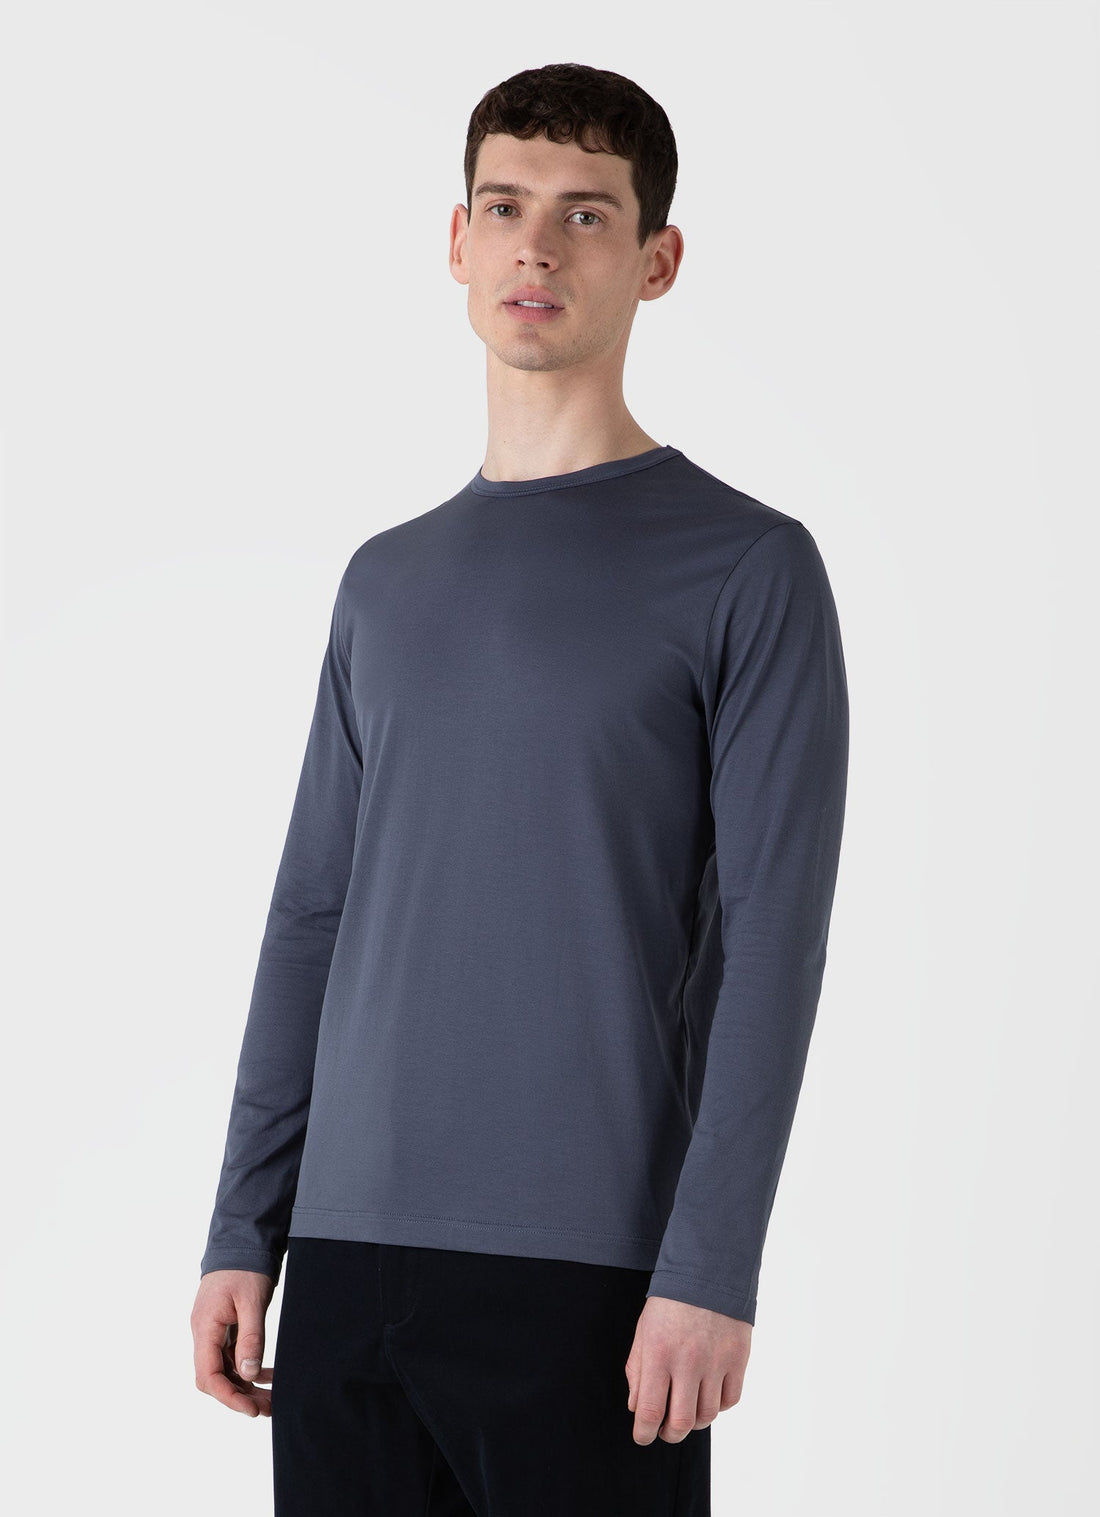 Men's Long Sleeve Classic T-shirt in Slate Blue